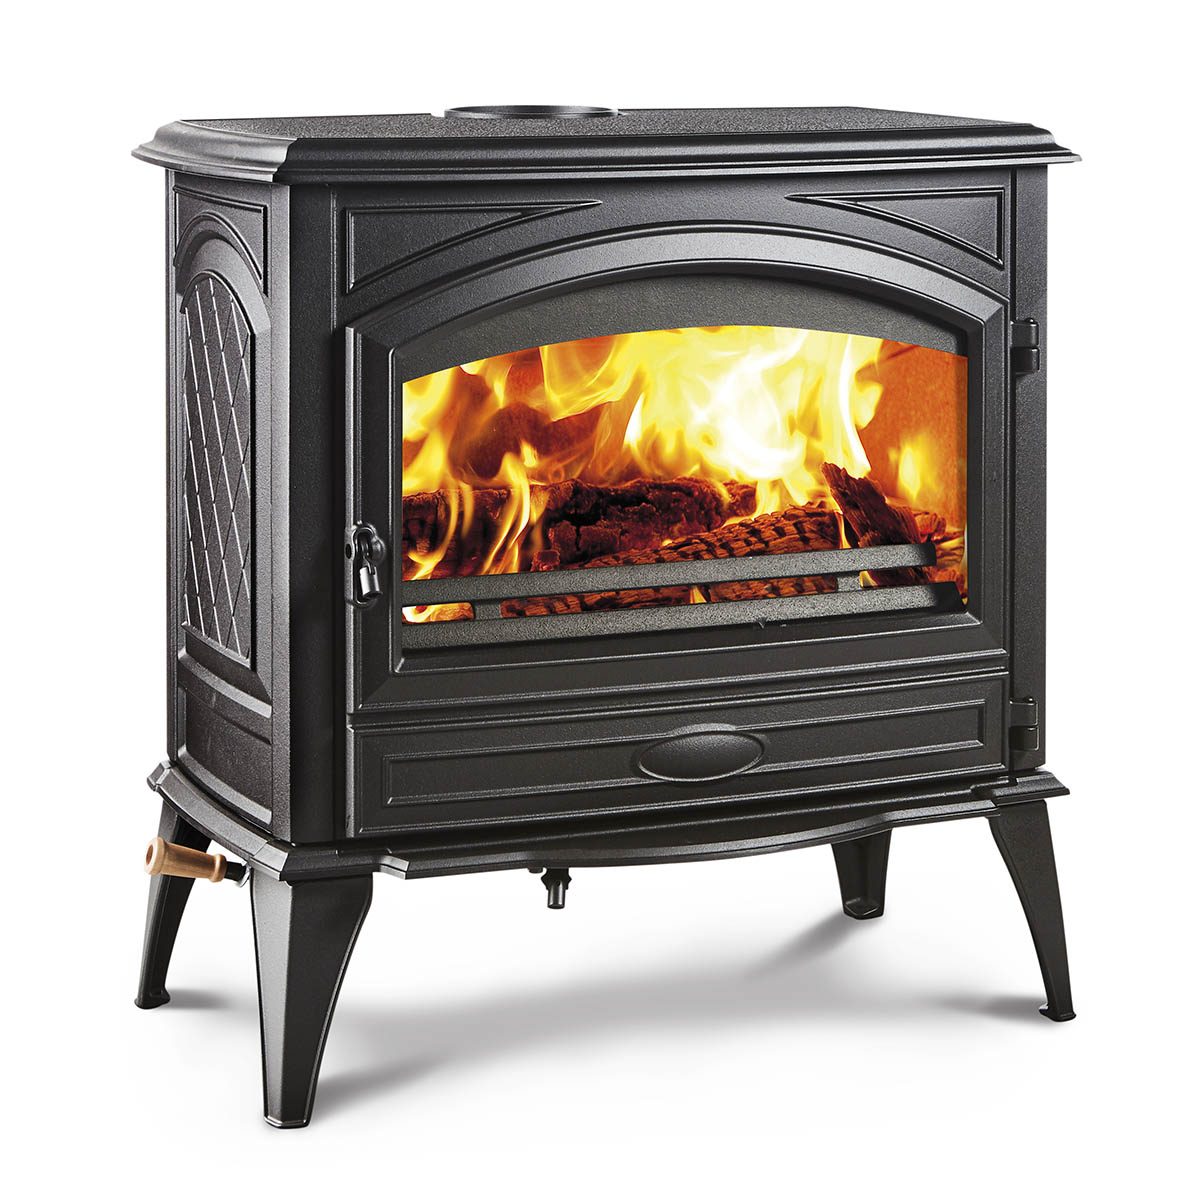 Lynwood W-76 wood stove